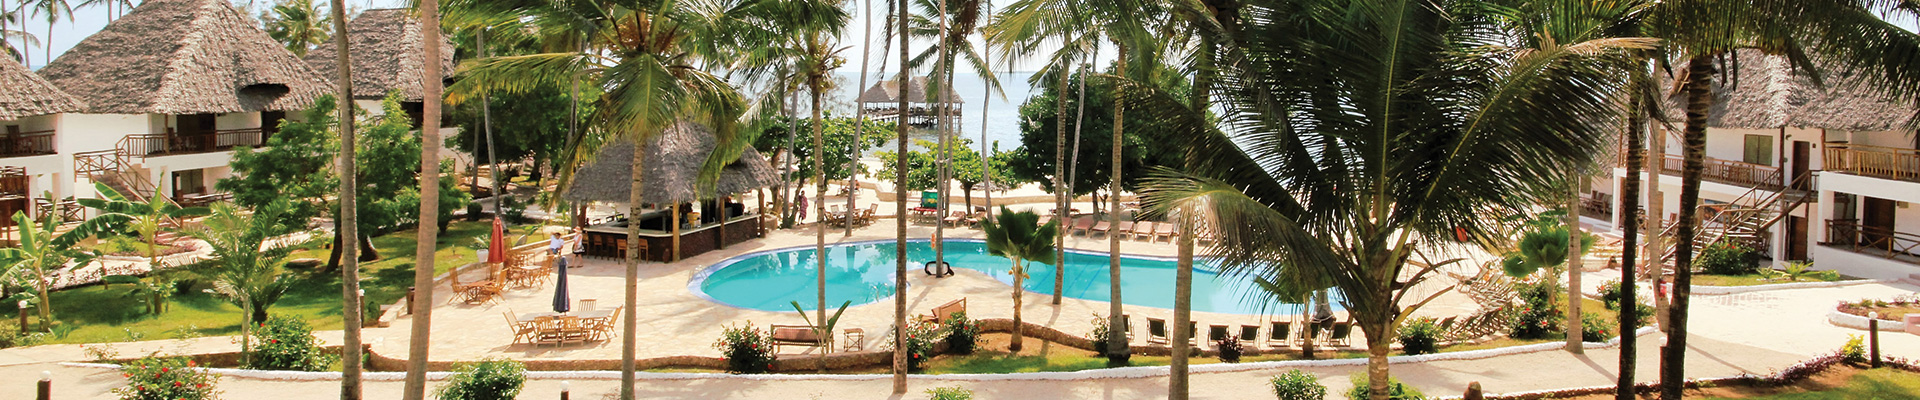 3* Paradise Beach Resort - Zanzibar Package on  FlySafair  (7 Nights)